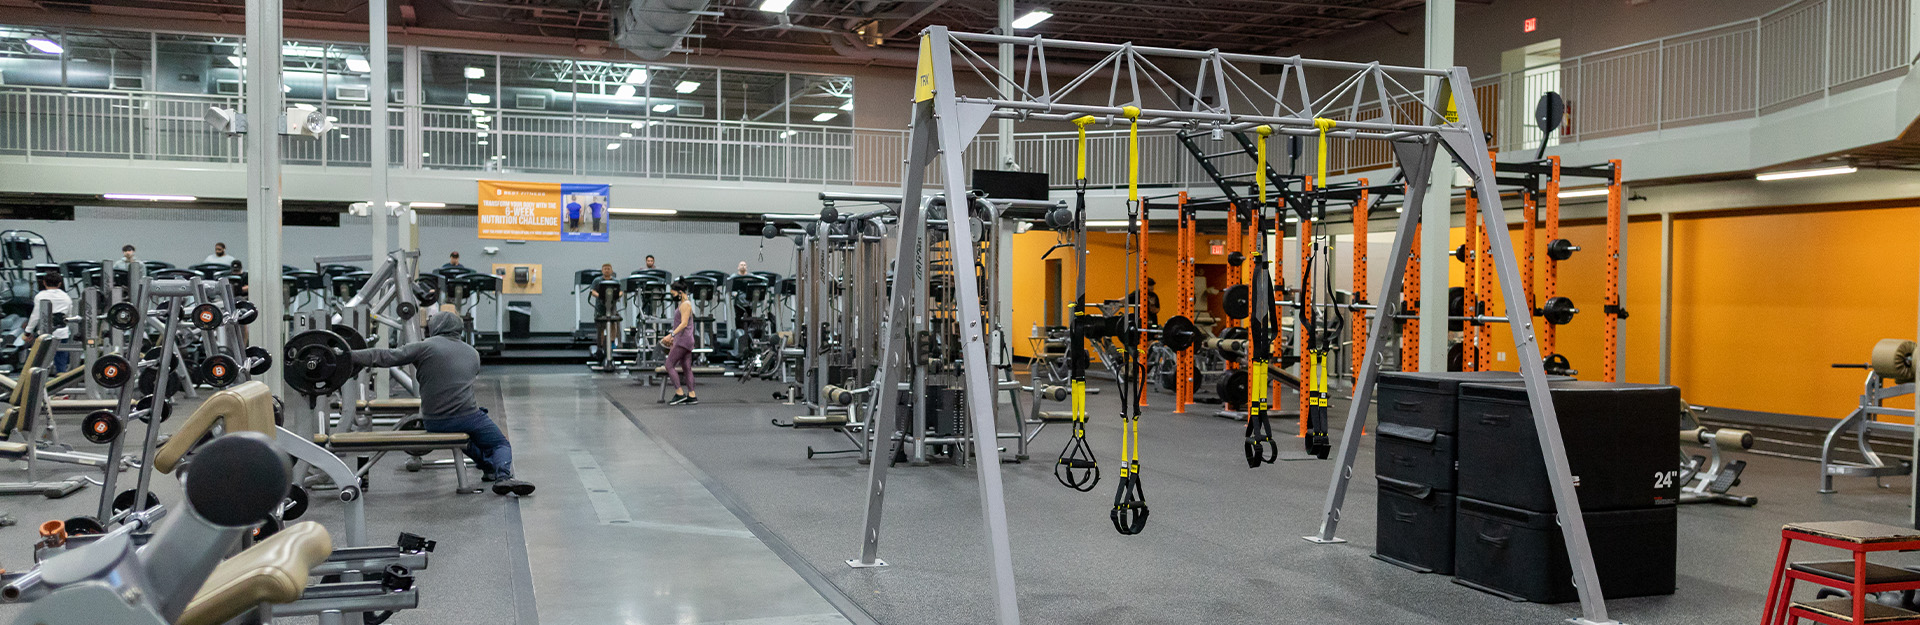 funtional training equipment in a modern gym